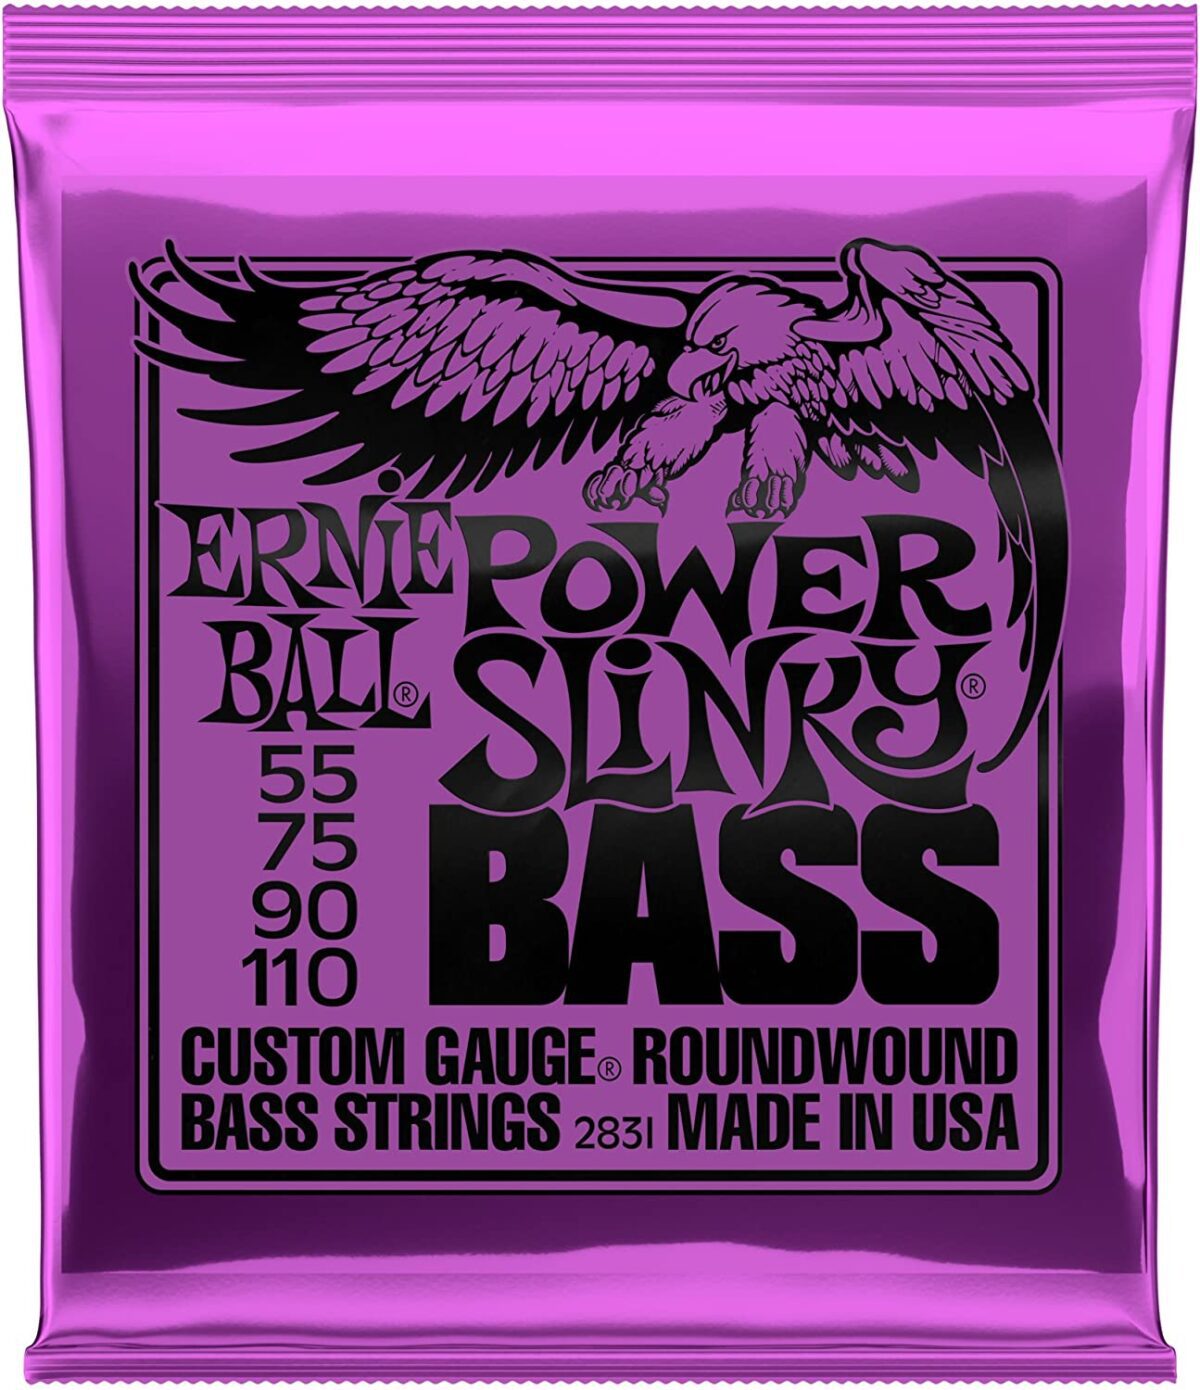 Power Slinky Nickel Wound Electric Bass Strings